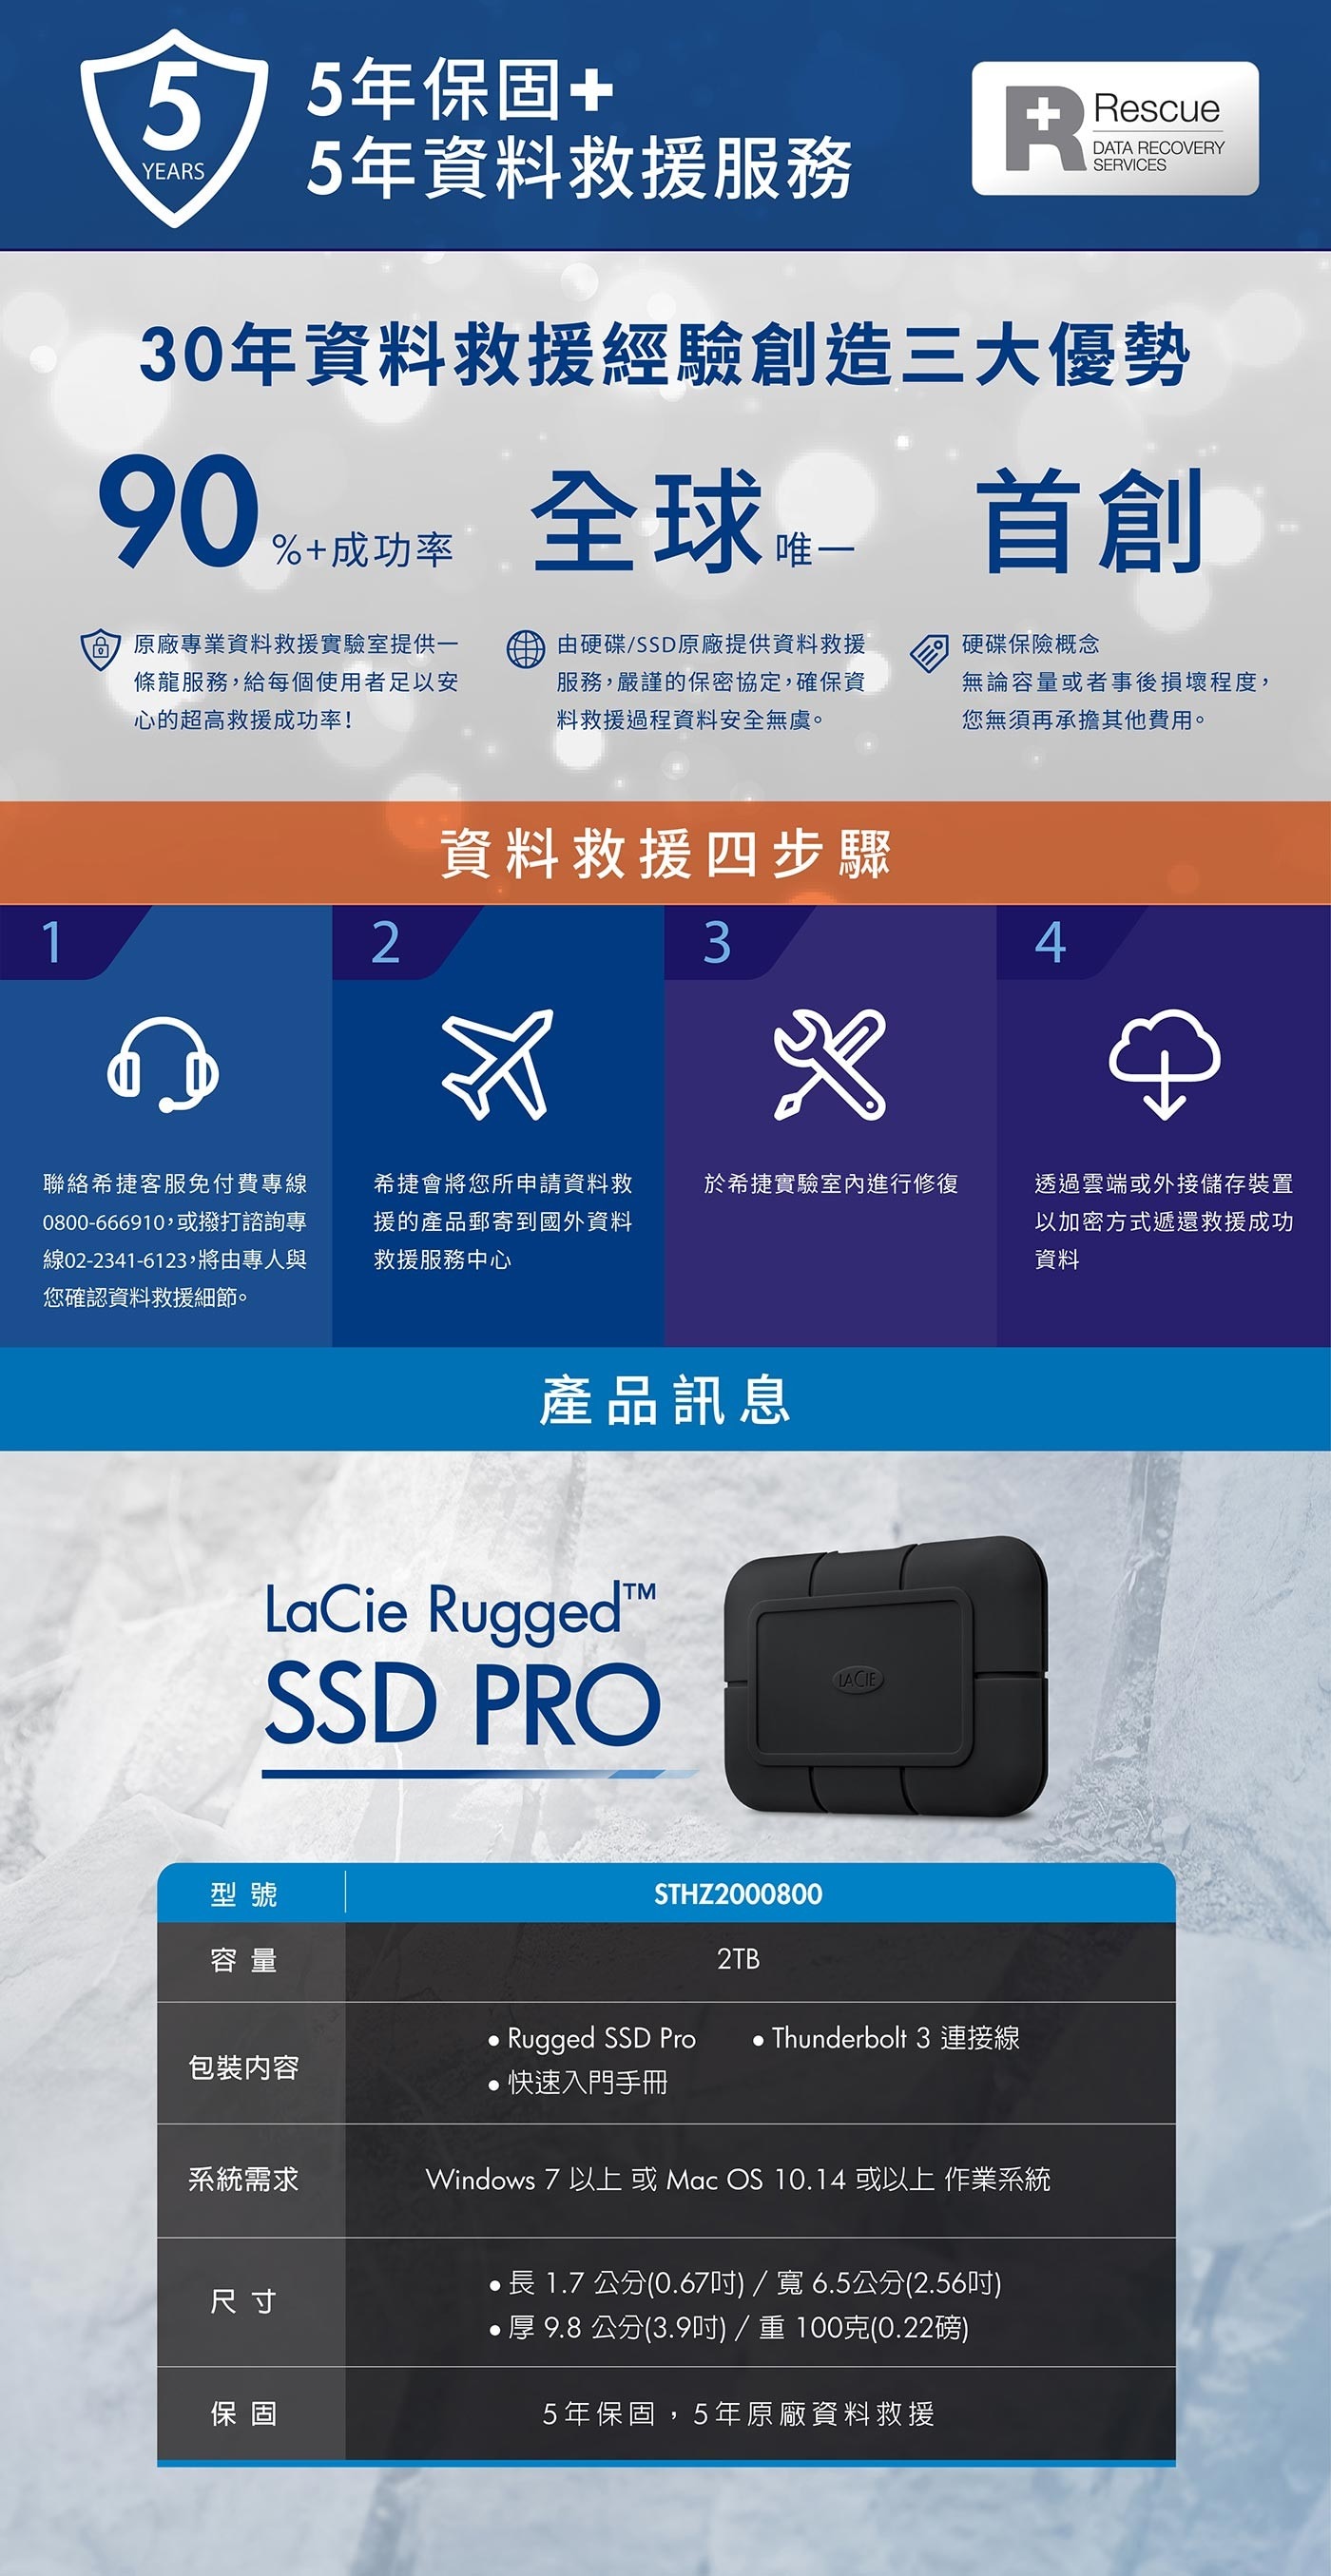 LaCie 2TB Rugged SSD Pro 外接式硬碟充分運用 Seagate FireCuda NVMe 固態硬碟機的效能，將 Thunderbolt 3 的功能做出最大發揮，且速度比傳統 SATA SSD 更快將近五倍。此外，它也具備極致的耐用性，影片製作人員和 DIT 可在任何環境中，直接播放運算需求最高的 6K、8K 及超慢動作原始檔案，無須進行轉碼。